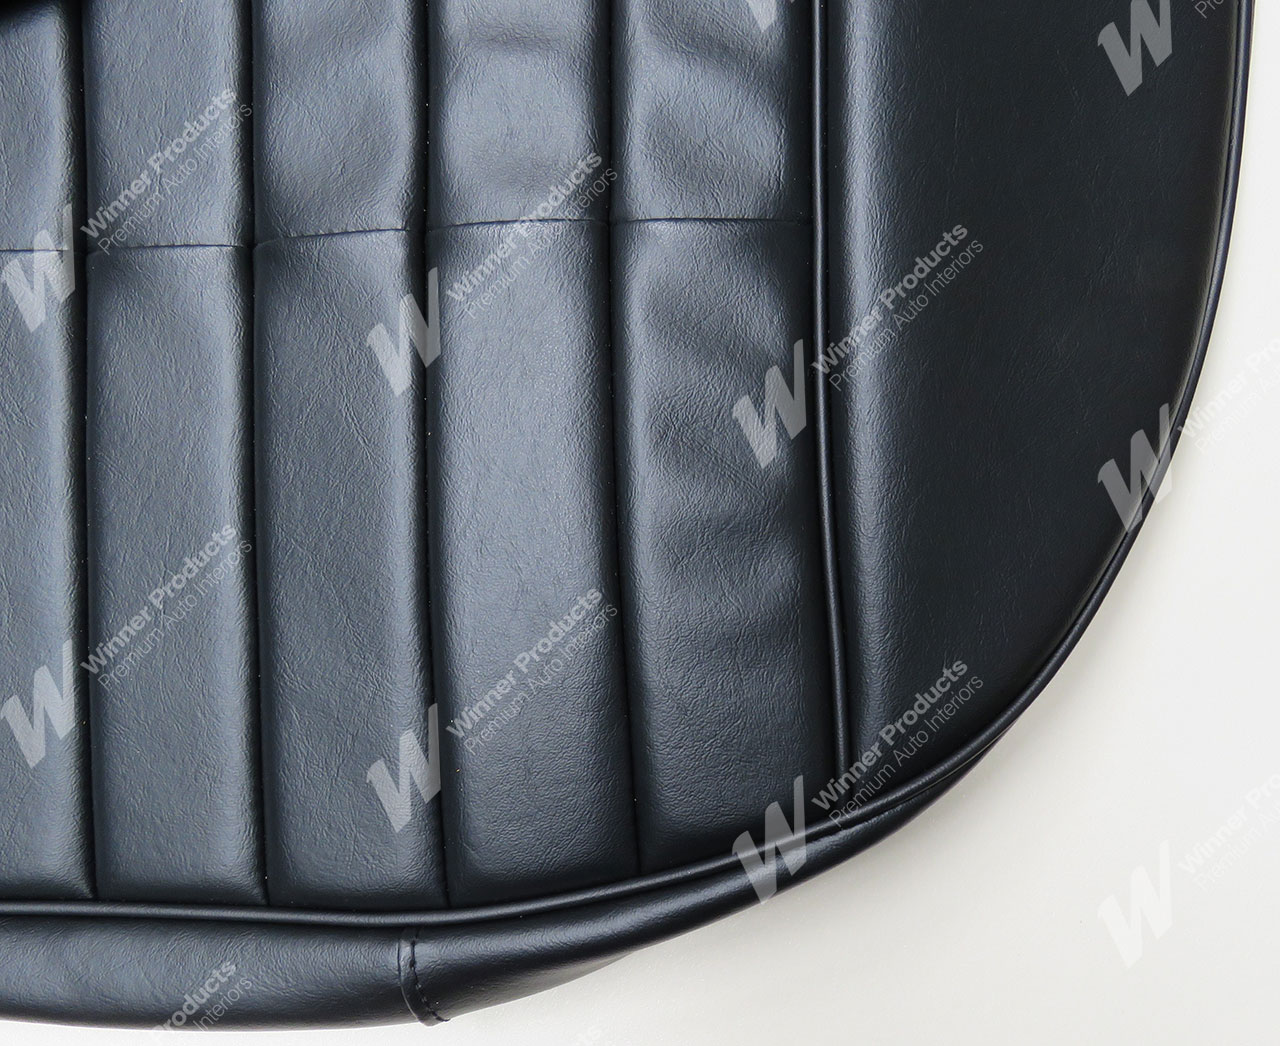 Holden Premier HK Premier Wagon 10R Black Seat Covers (Image 5 of 5)